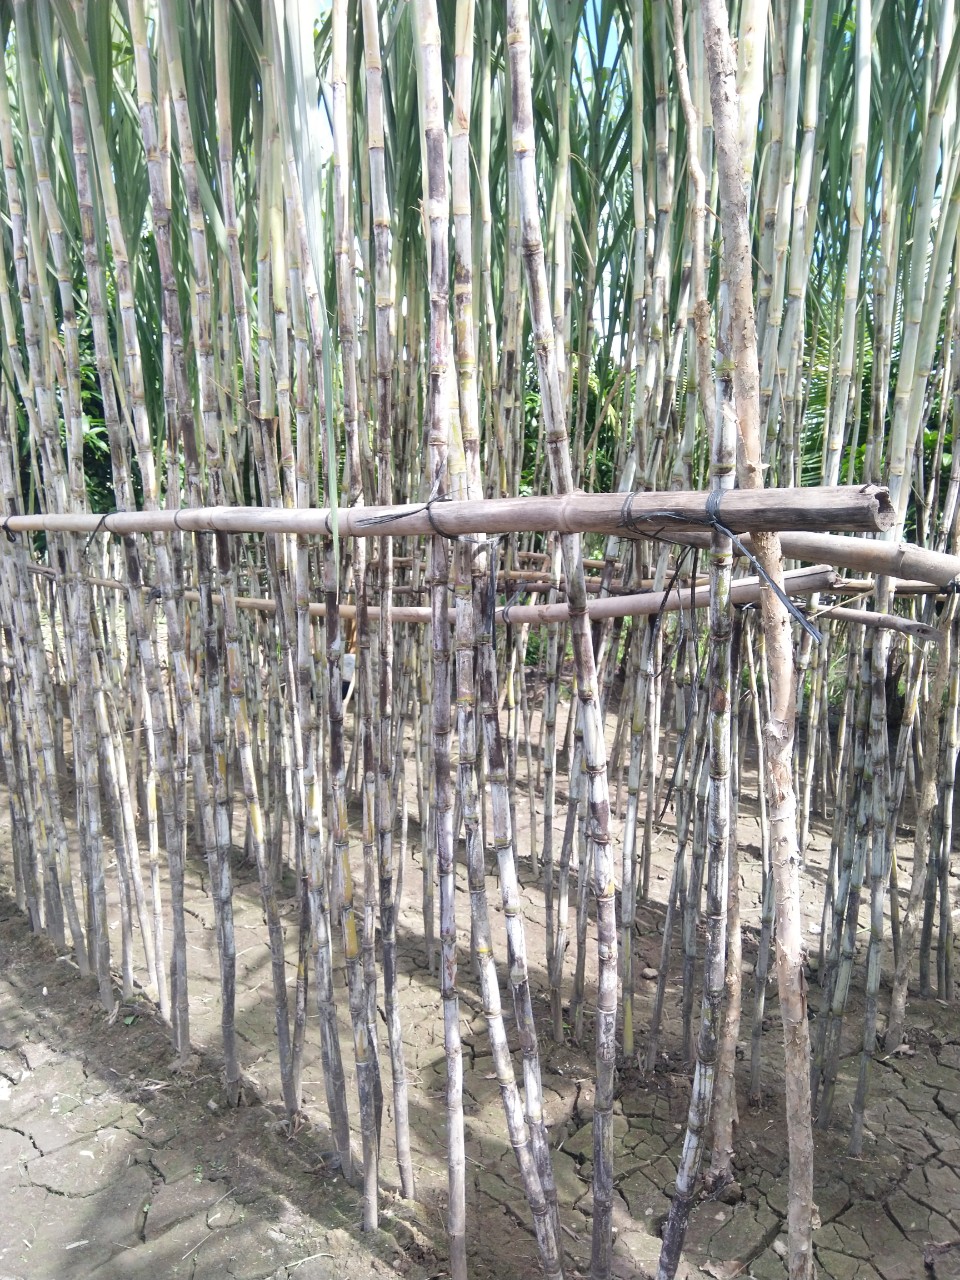 Sugarcane farm